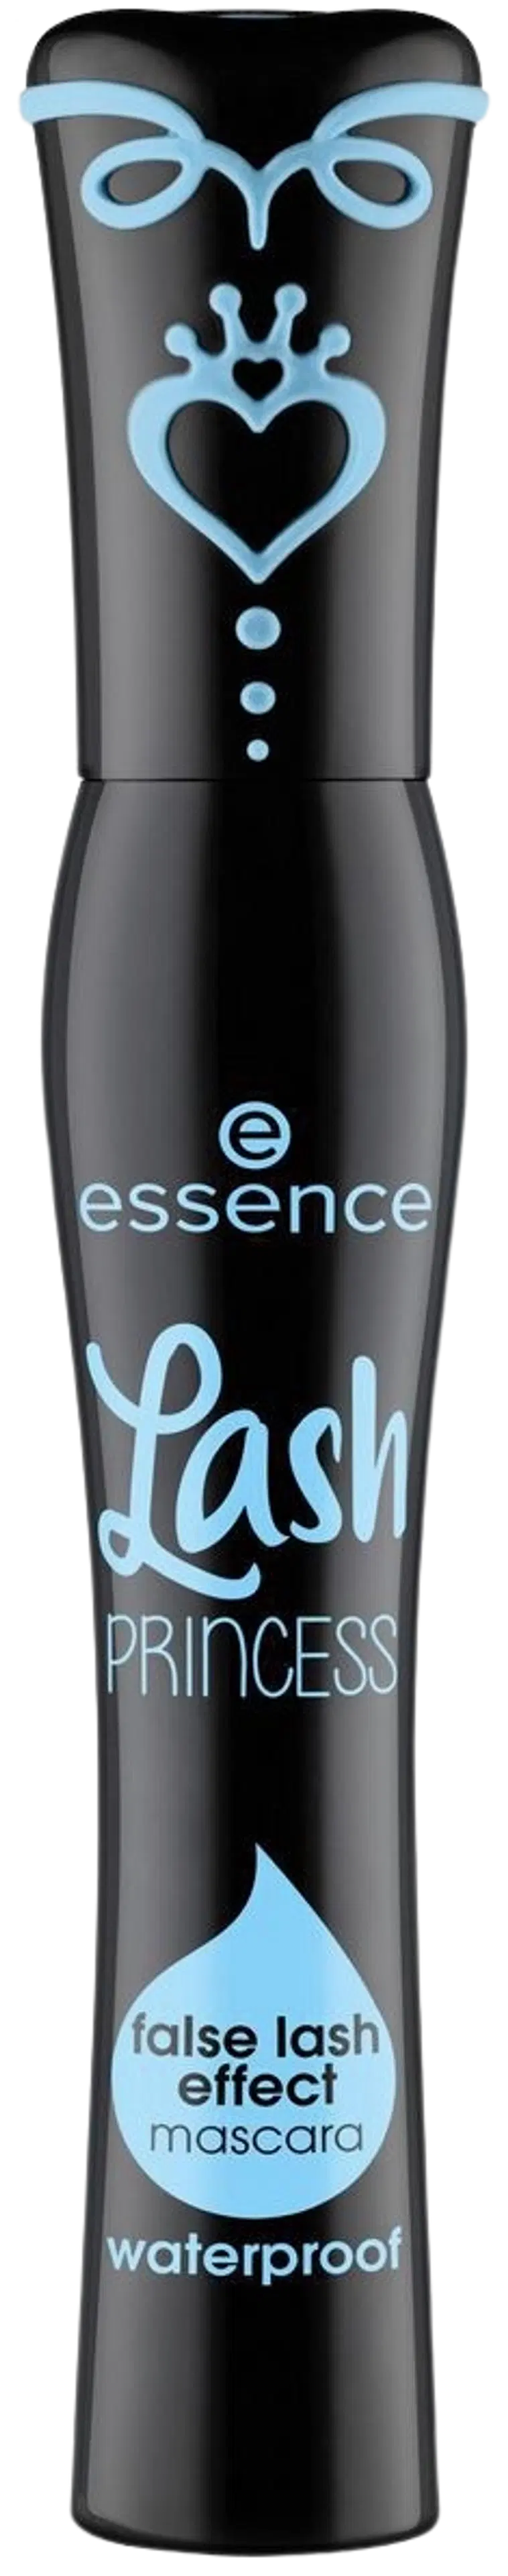 essence Lash PRINCESS false lash effect mascara waterproof vedenkestävä ripsiväri 12 ml